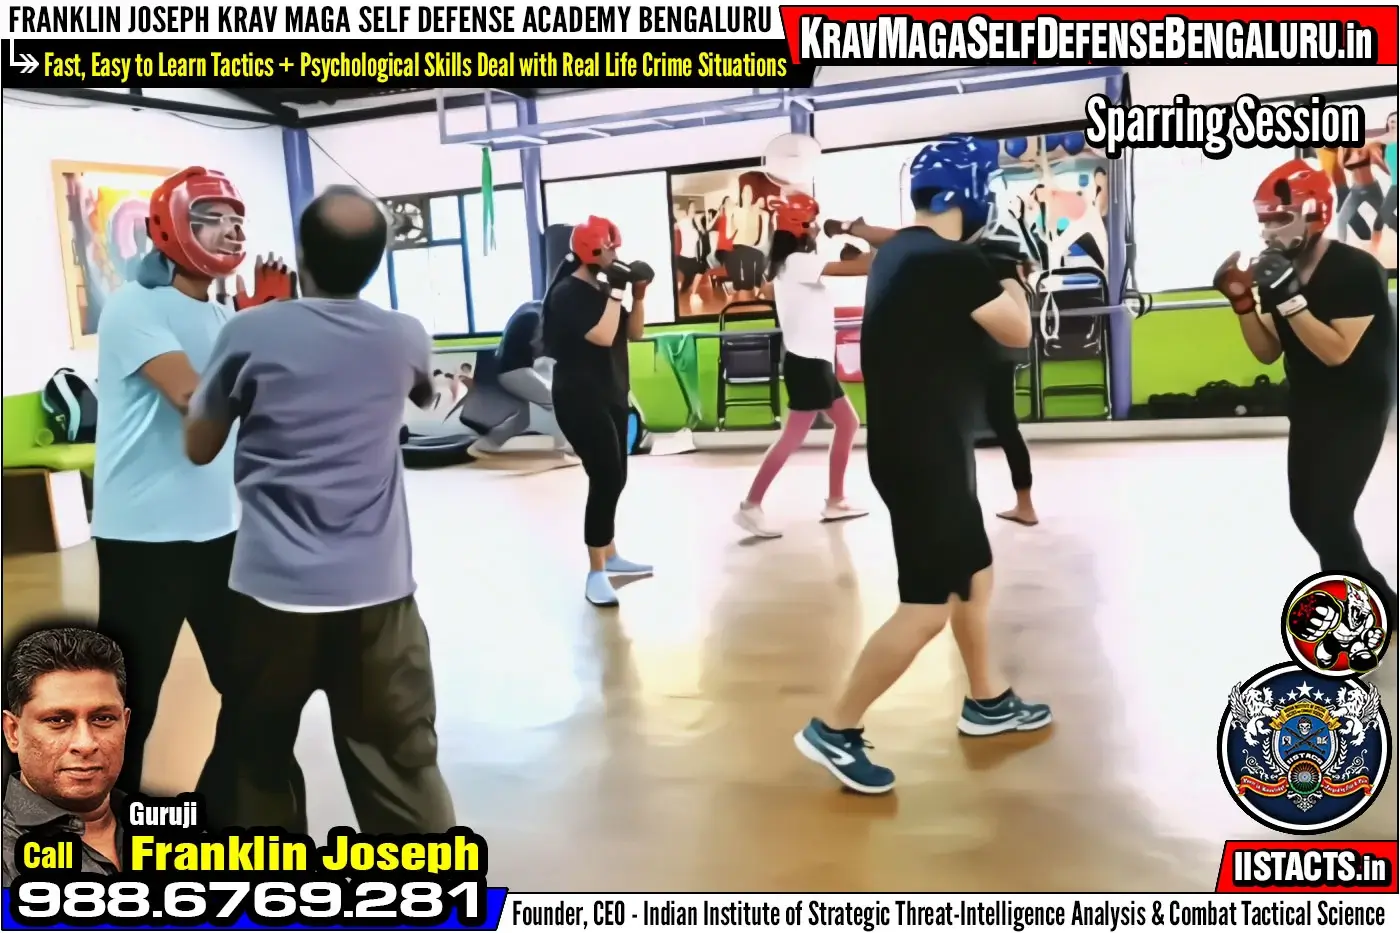 November Franklin Joseph Krav Maga Self Defense (Bengaluru, India) Videos